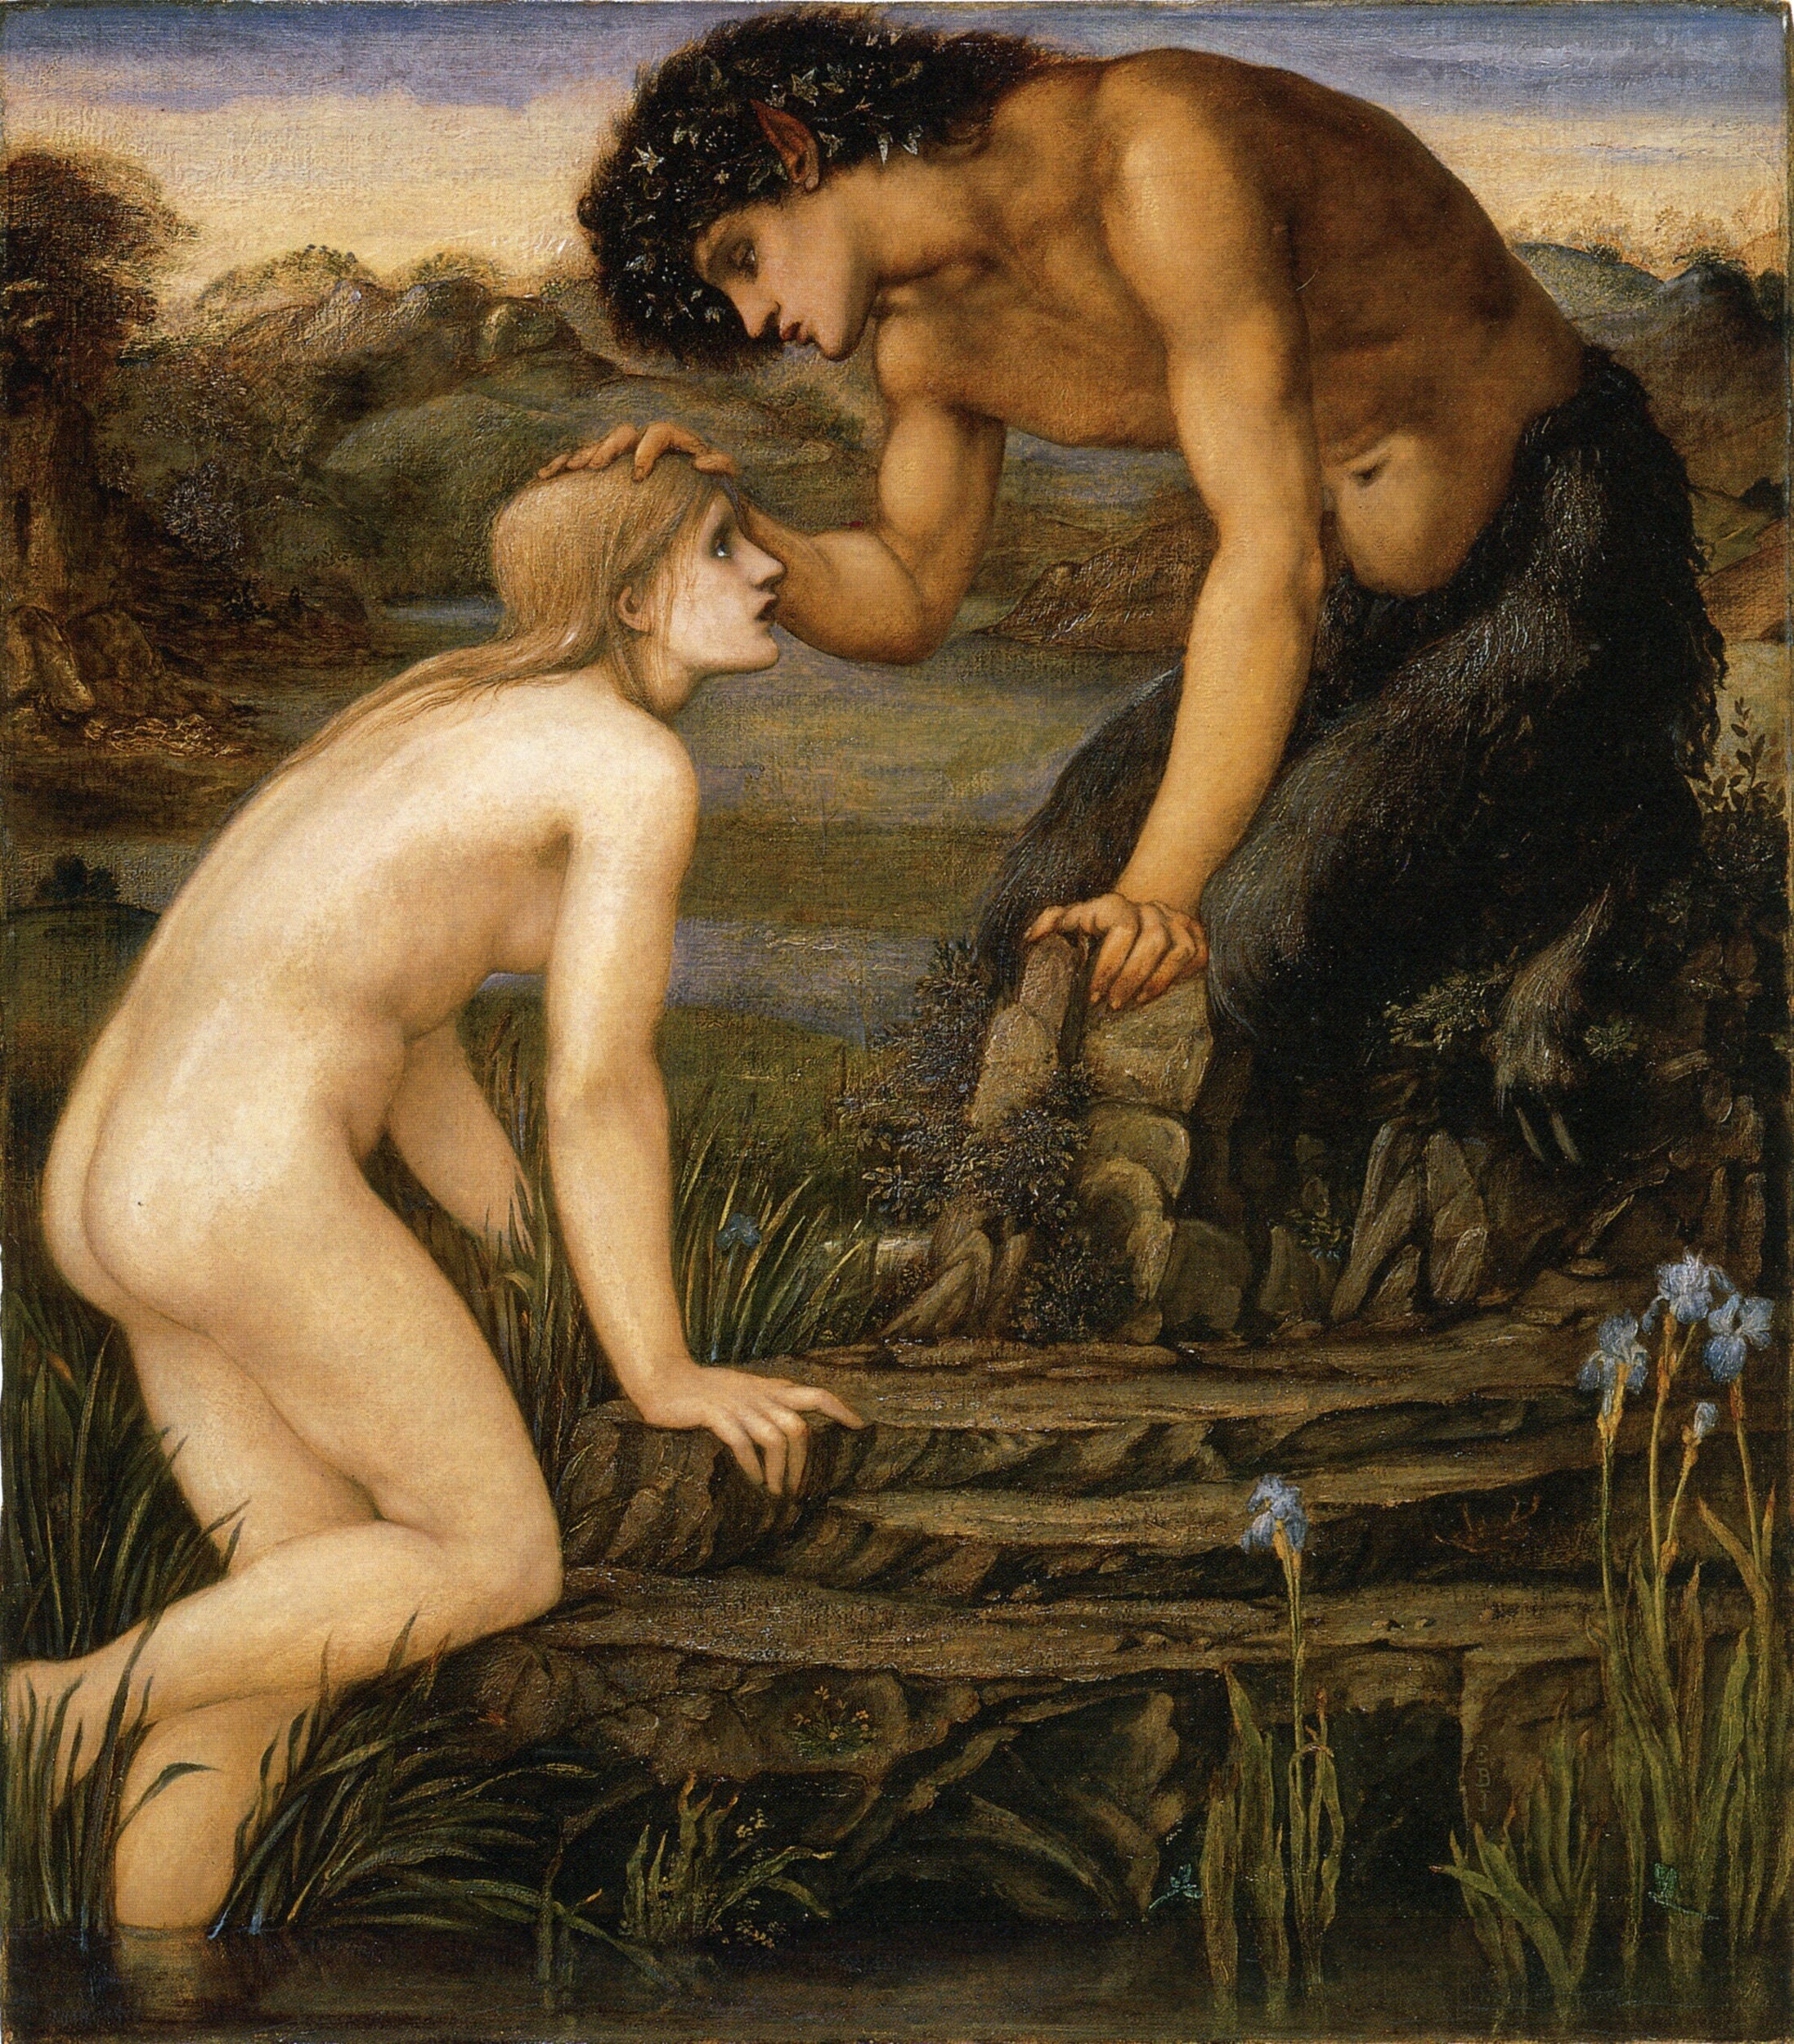 Edward Burne Jones Pan and Psyche Cupid and Psyche Romantic